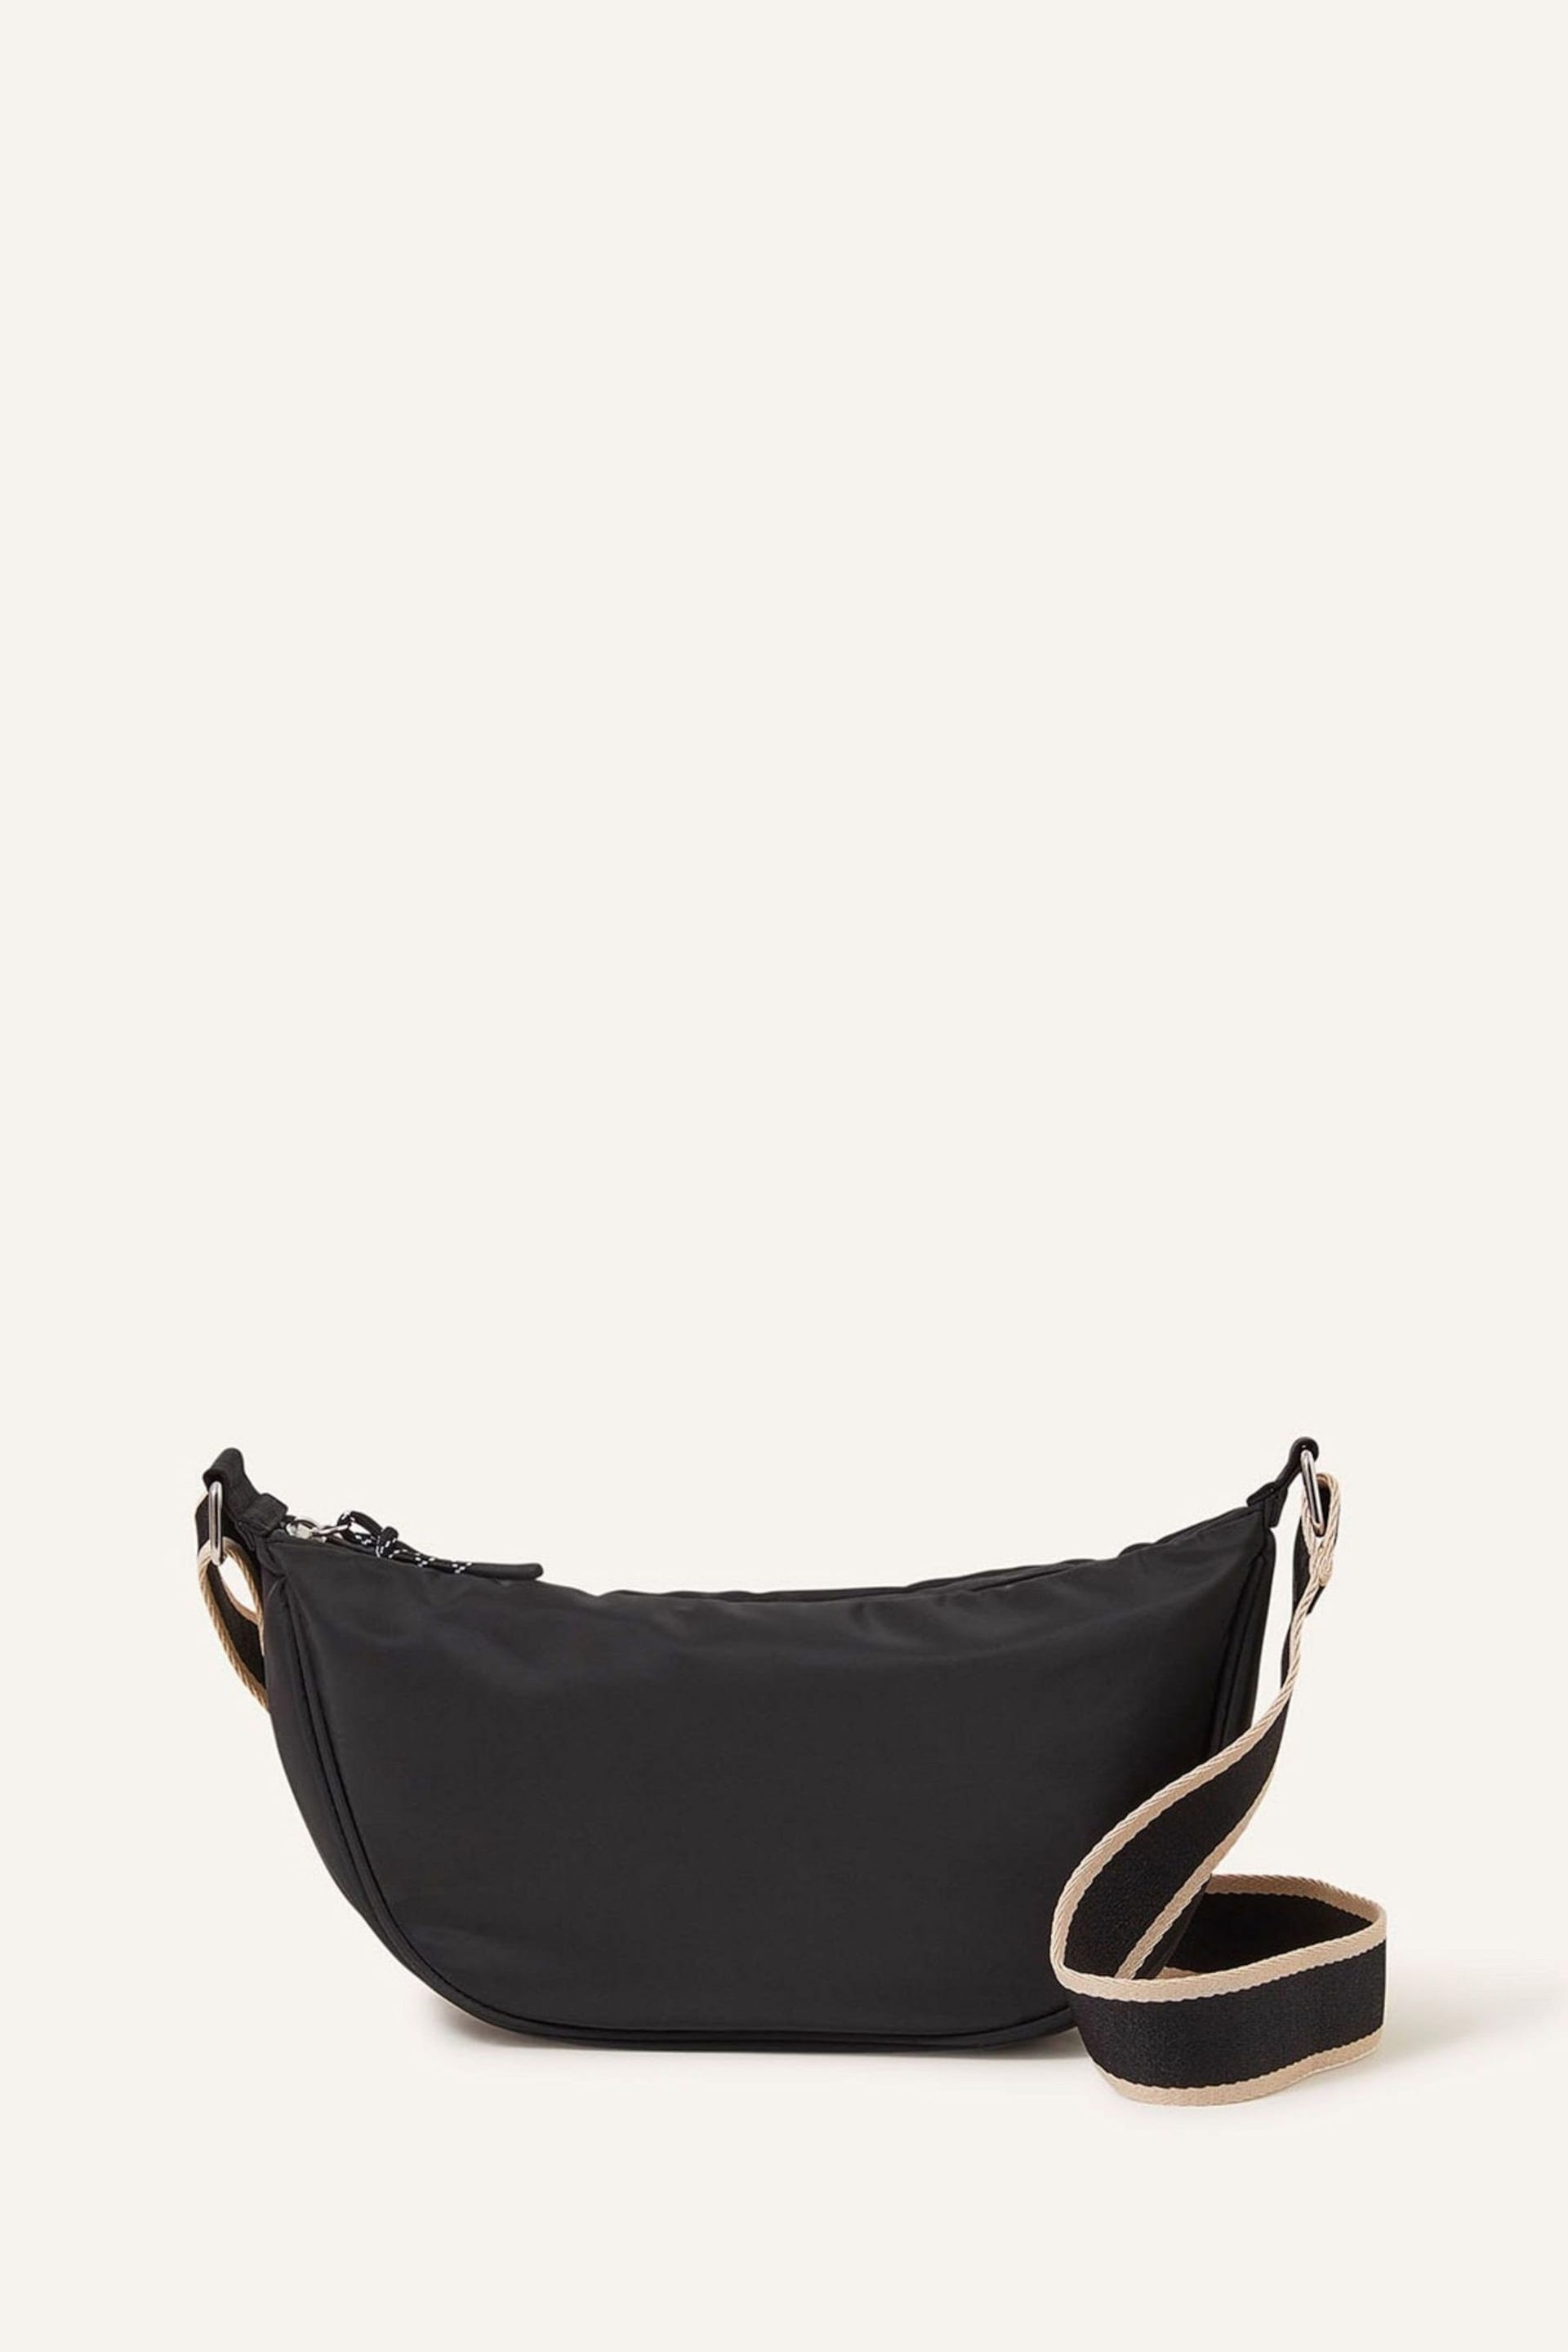 Accessorize Black Sling Cross-Body Bag - Image 1 of 2